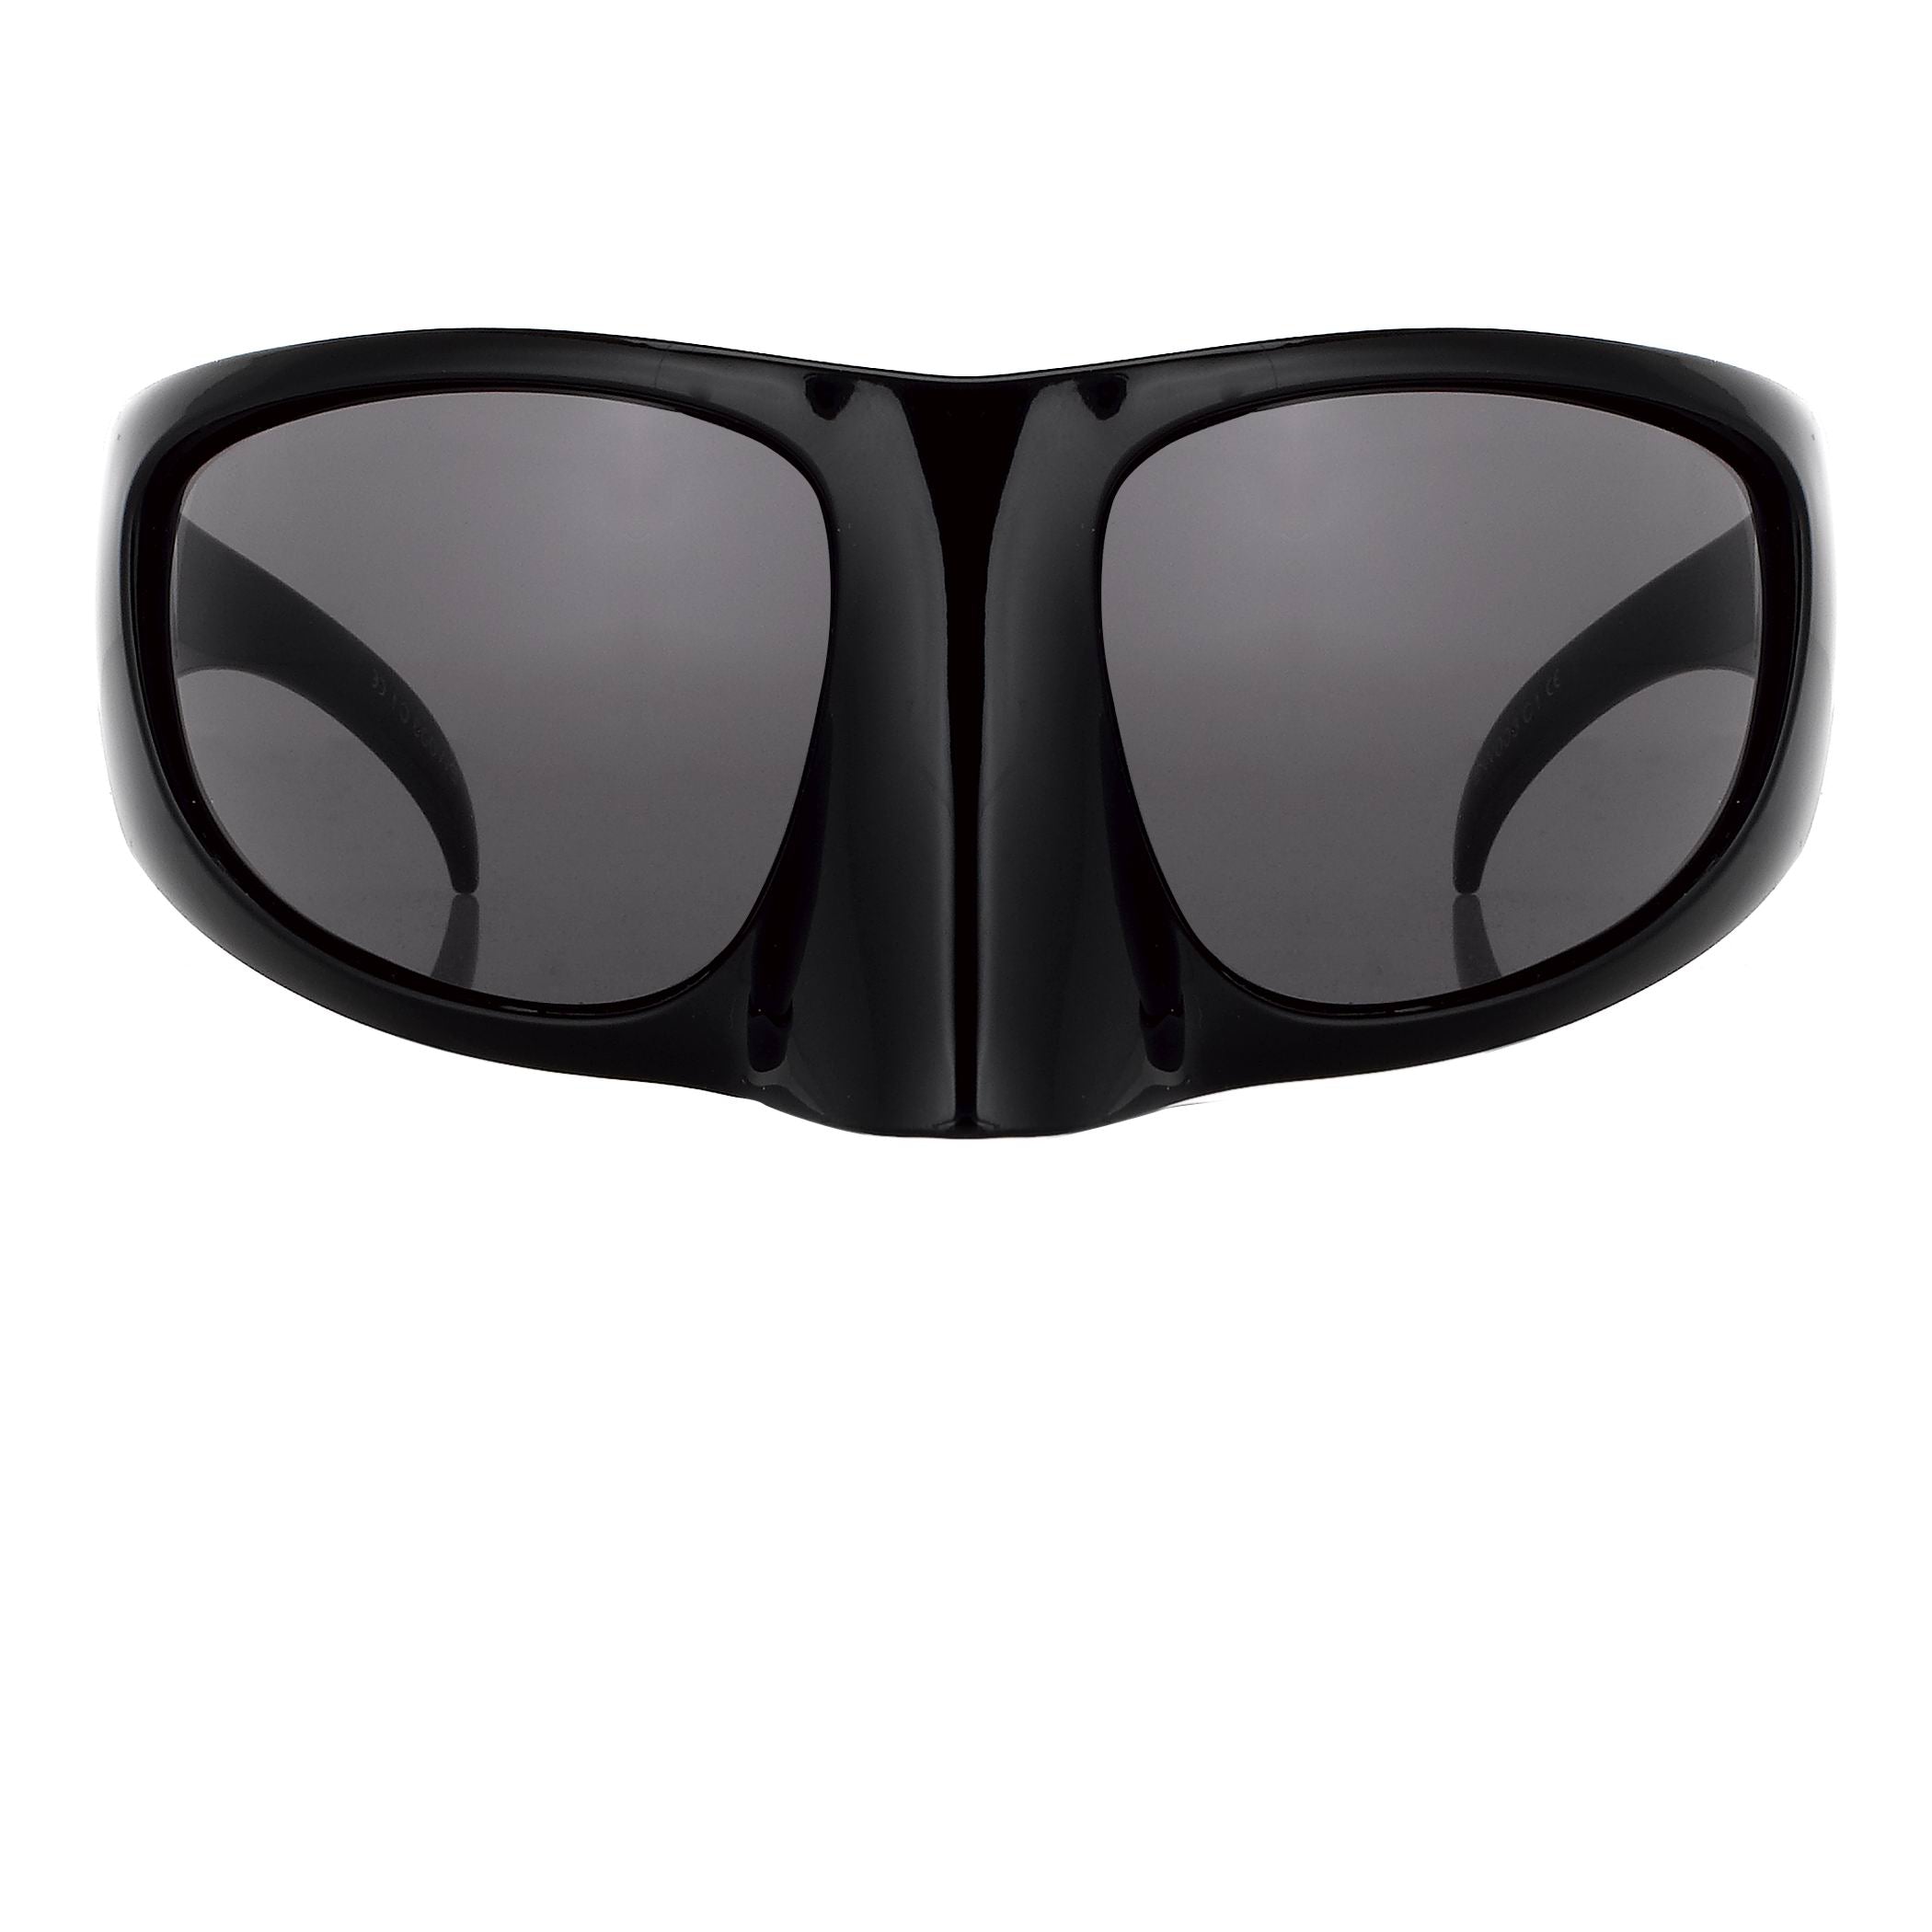 Mask Sunglasses in Black